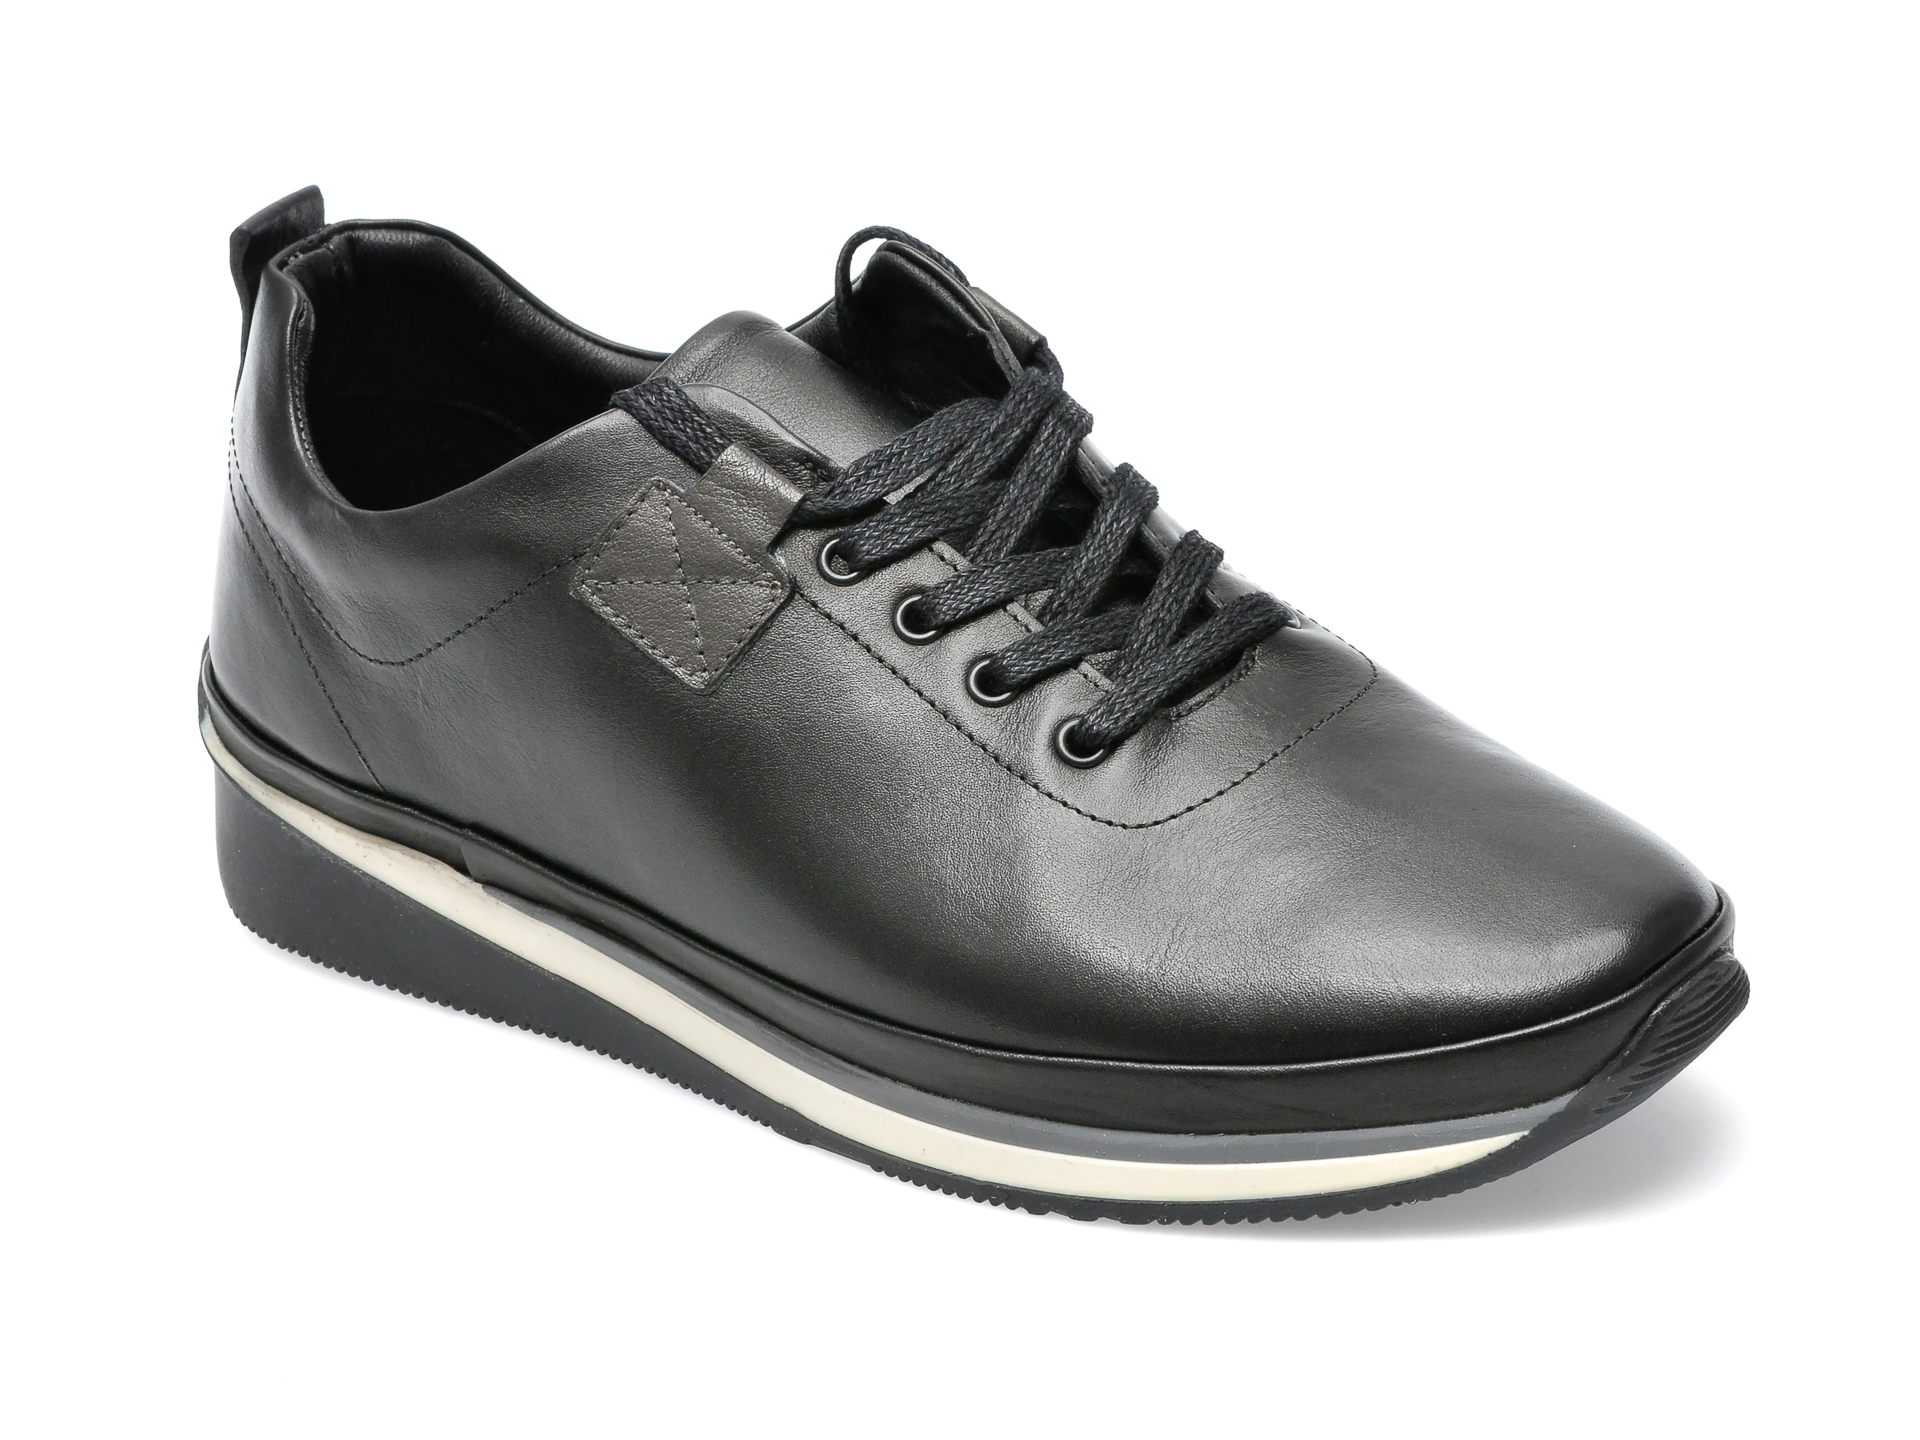 Pantofi AXXELLL negri, AV001, din piele naturala /barbati/pantofi